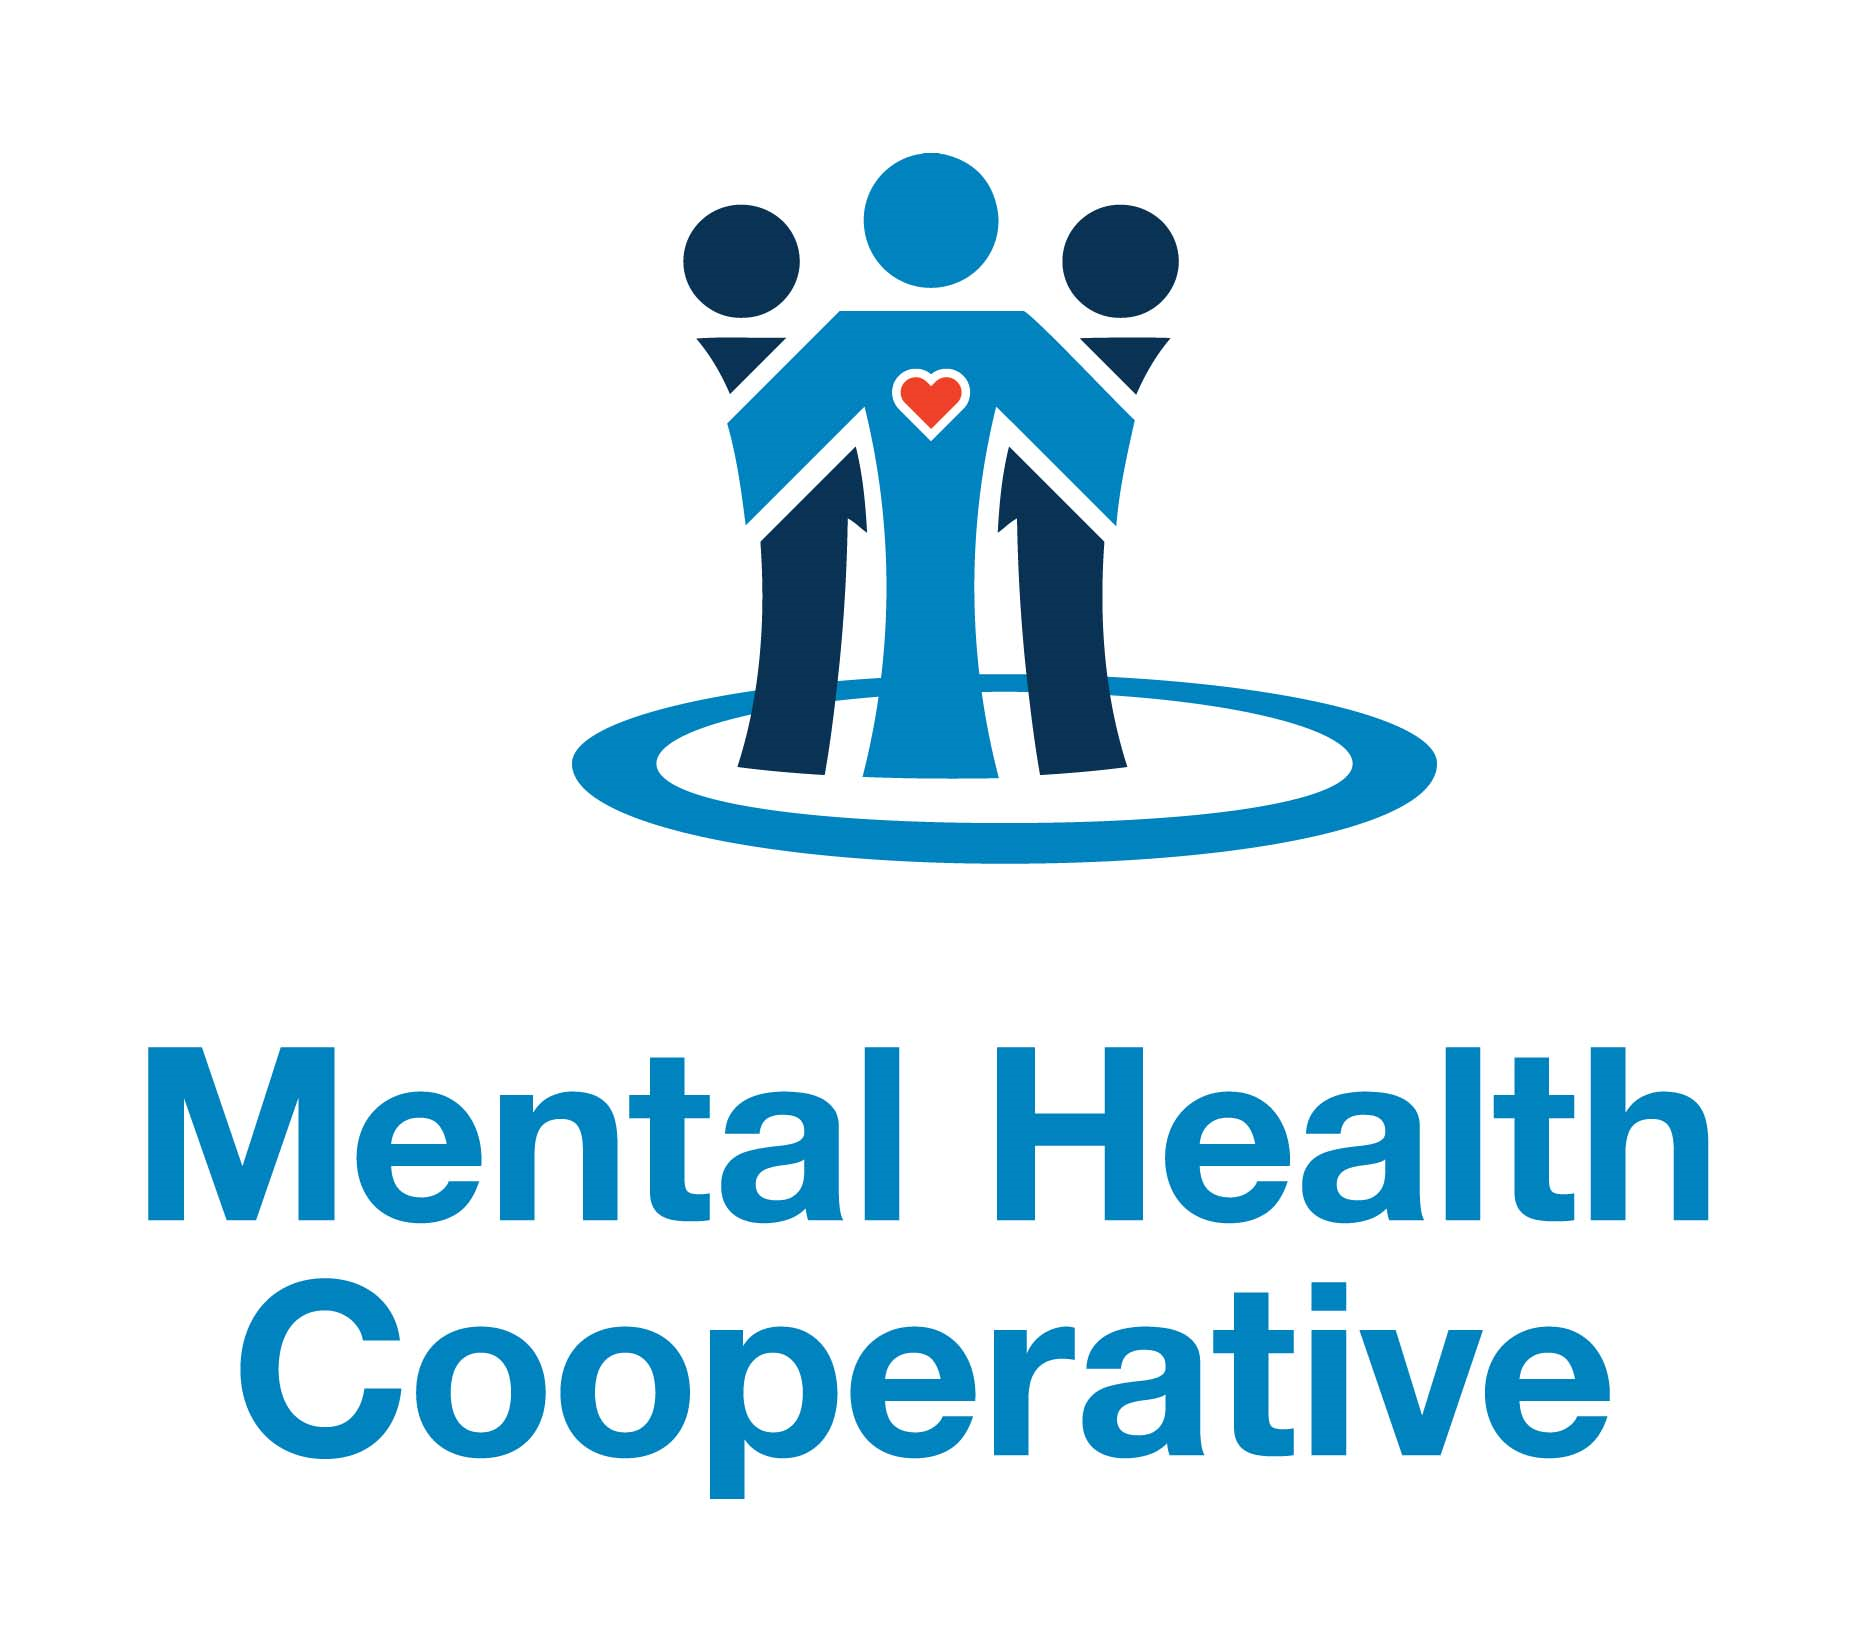 Mental Health Cooperative logo